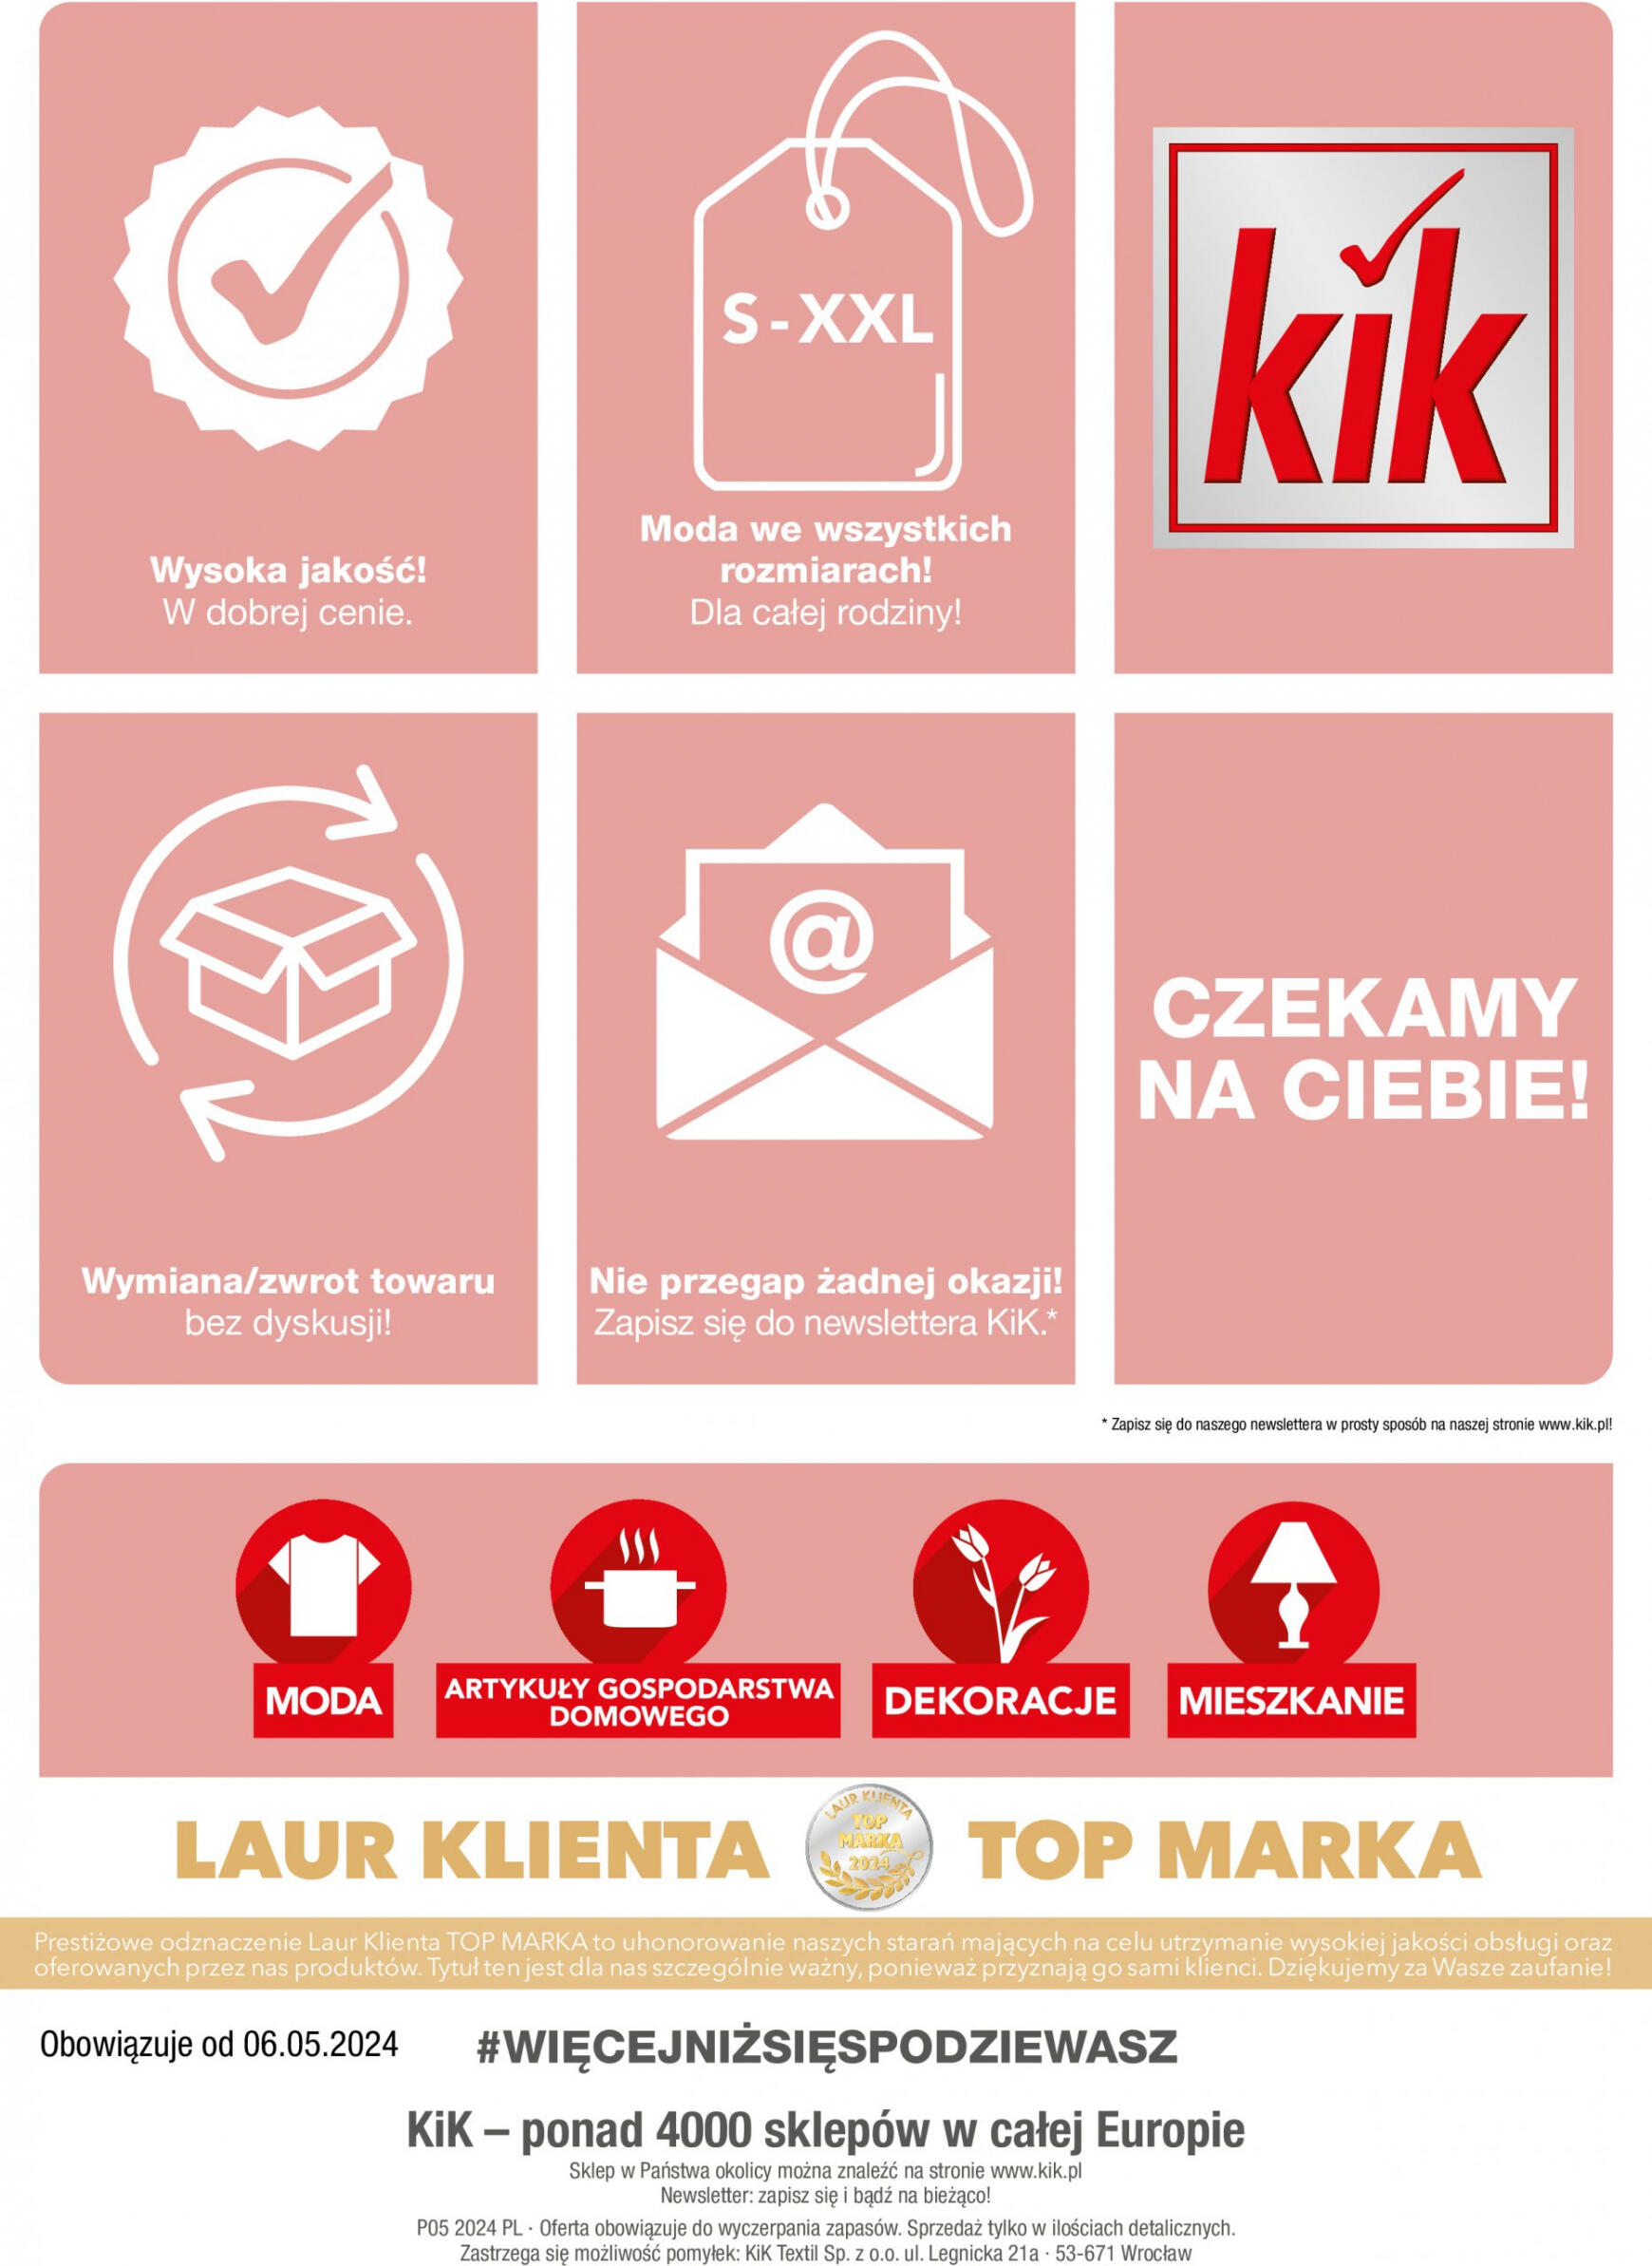 kik - Kik gazetka aktualna ważna od 06.05. - 31.05. - page: 27